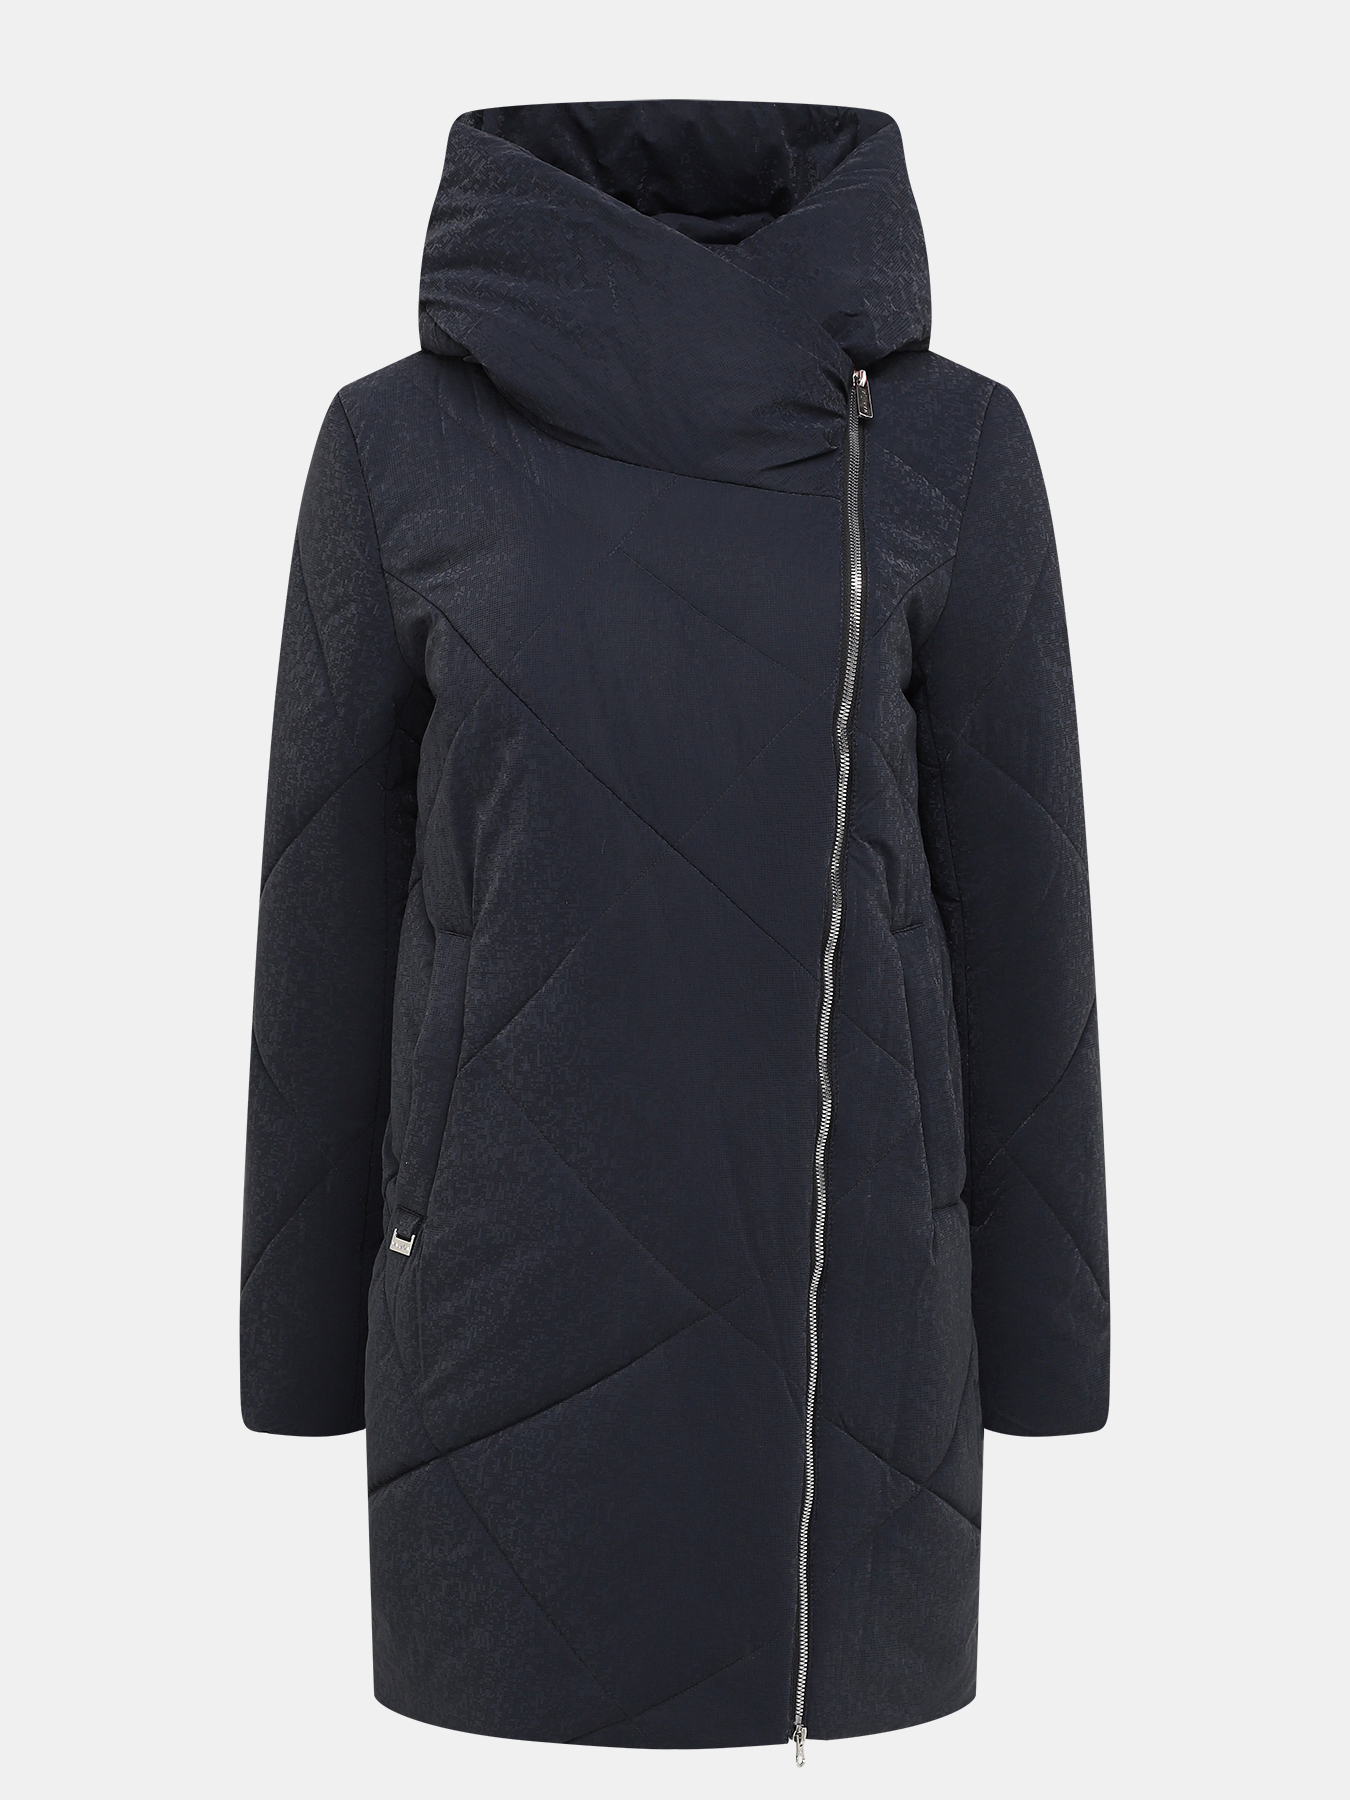 Пальто зимнее Maritta 433549-022, цвет темно-синий, размер 48